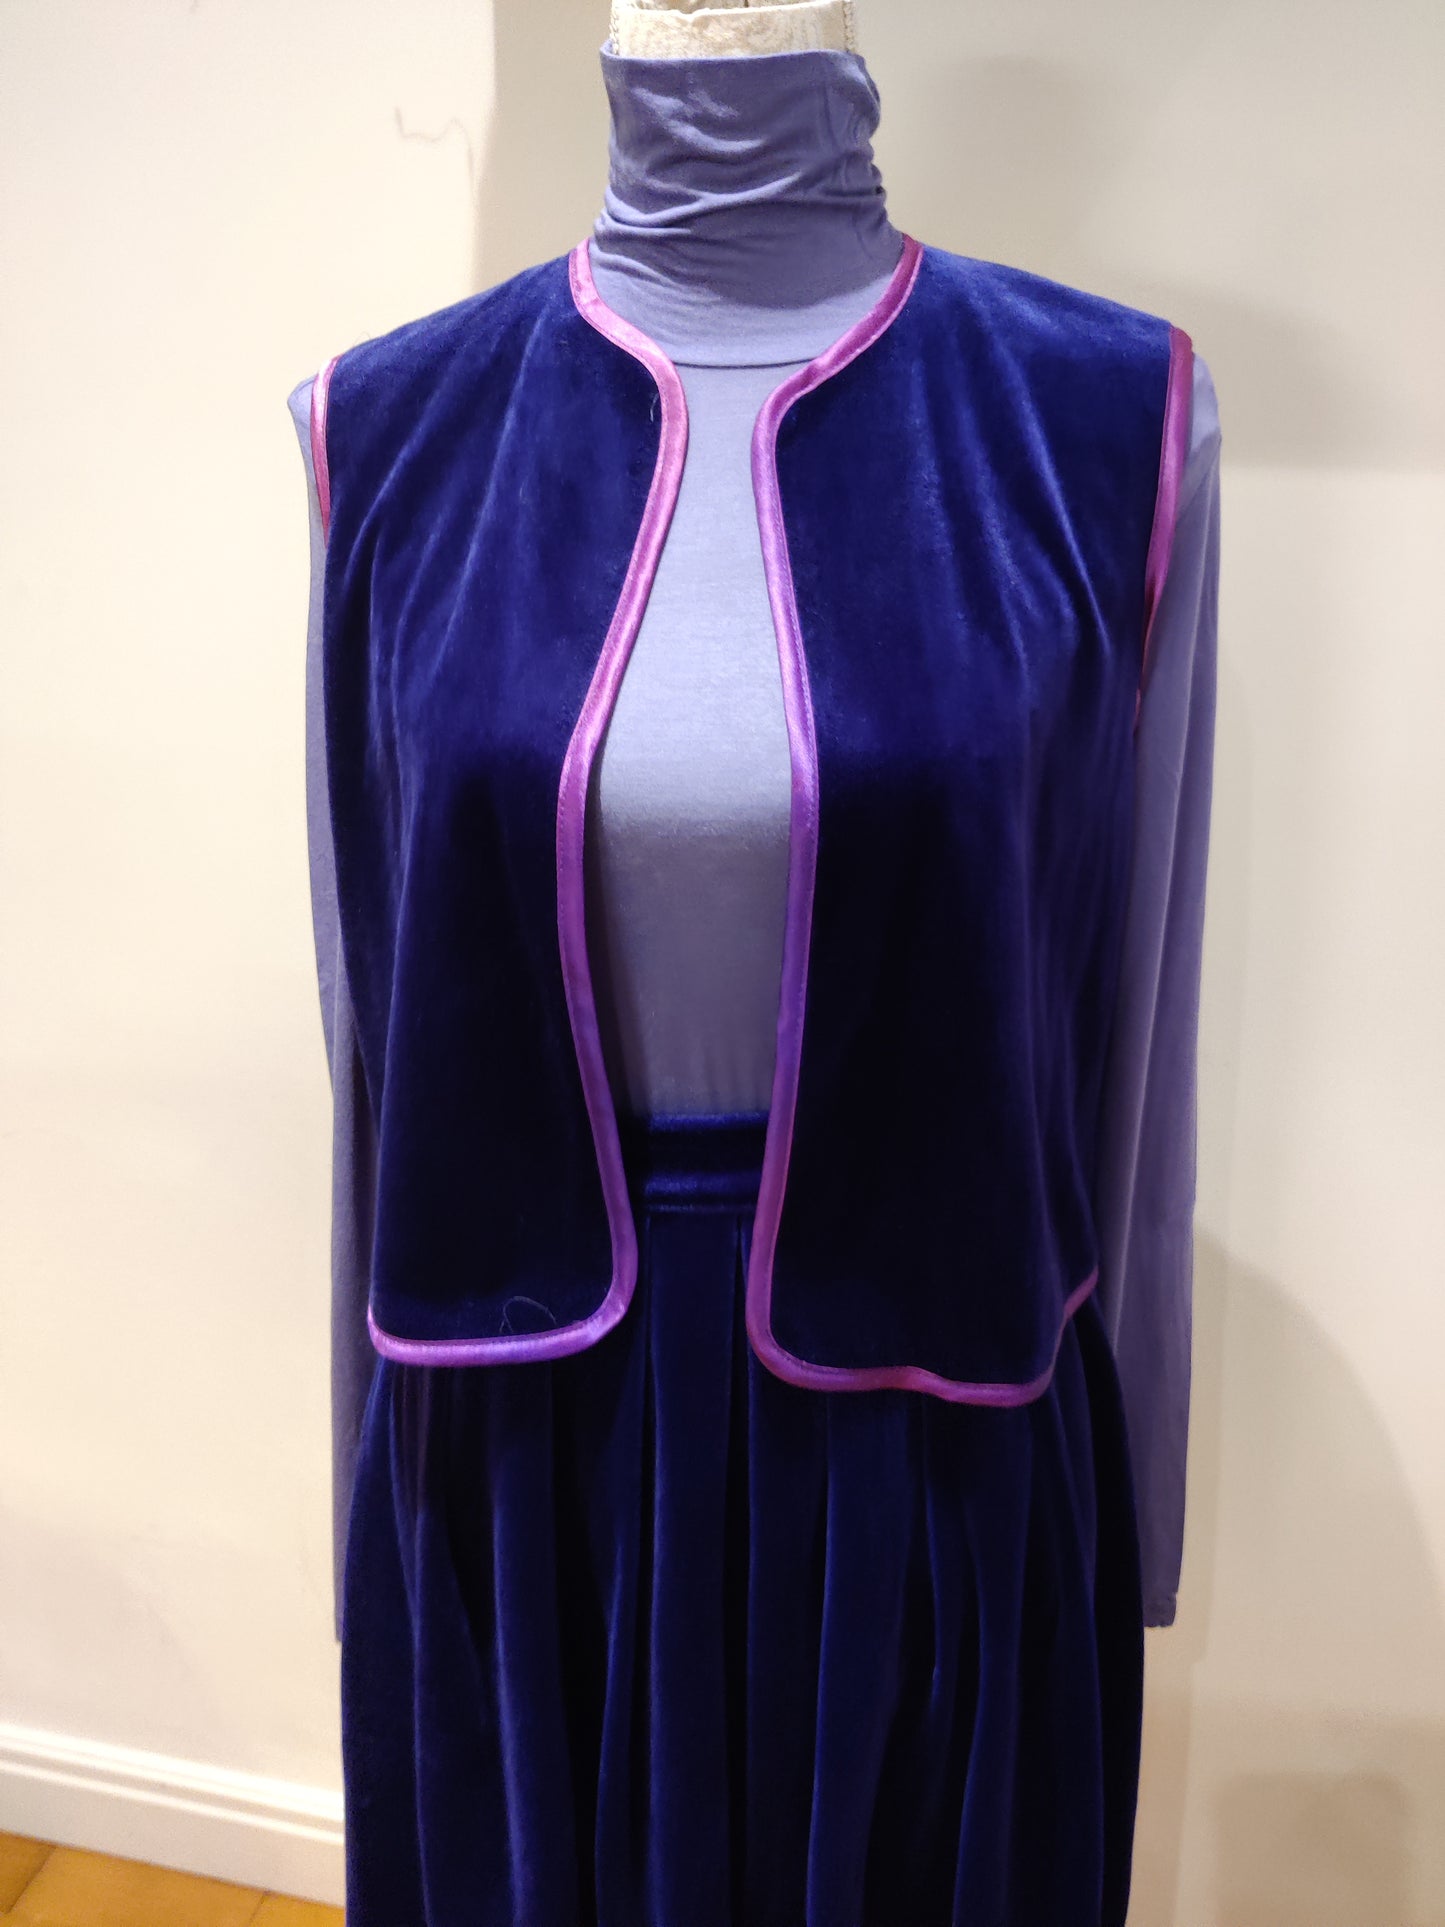 Vibrant blue velvet waistcoat with purple trim.